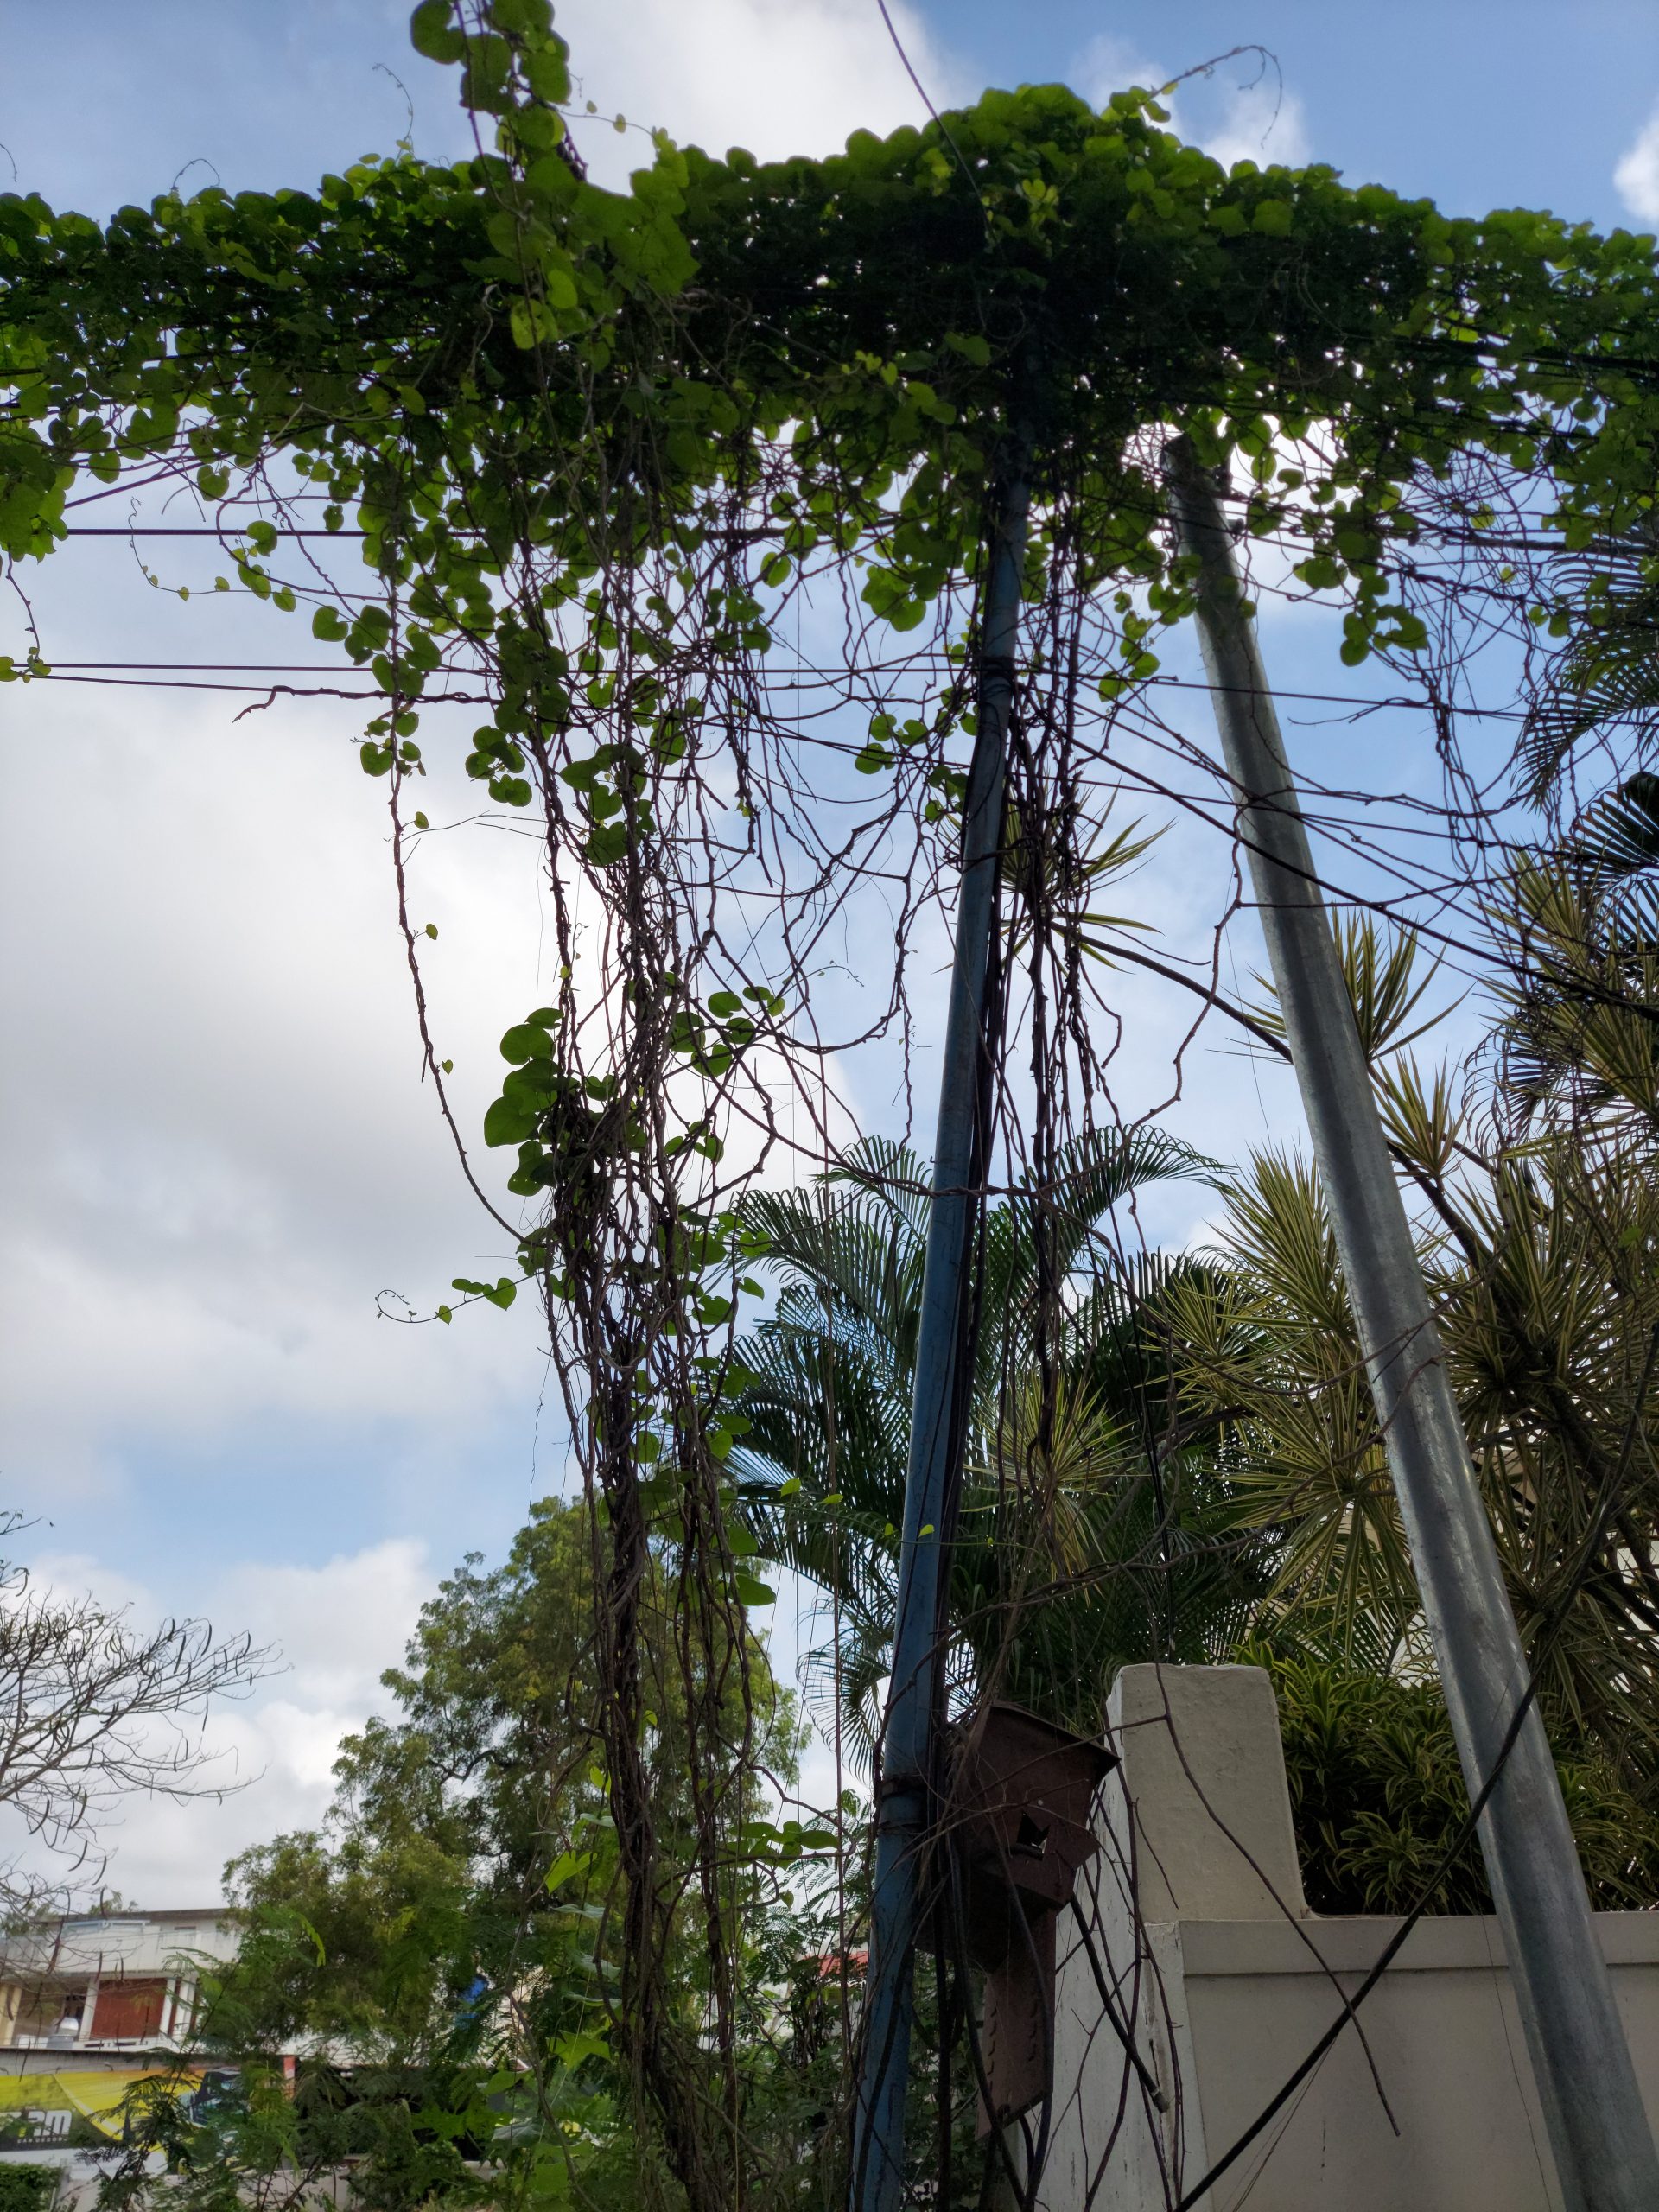 Climber plants on electric pole